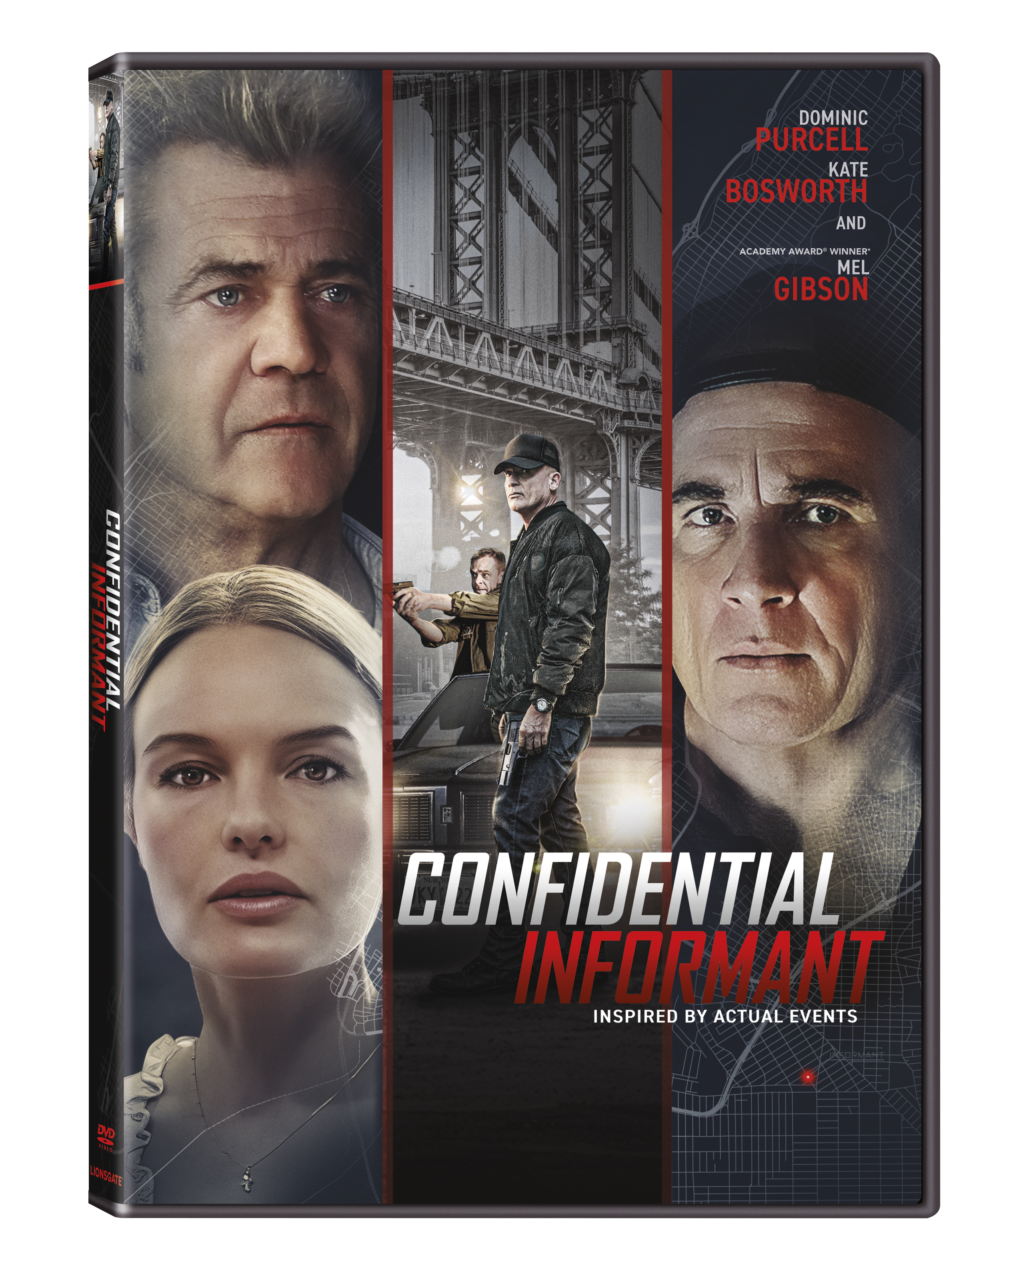 Confidential Informant DVD cover (Lionsgate)